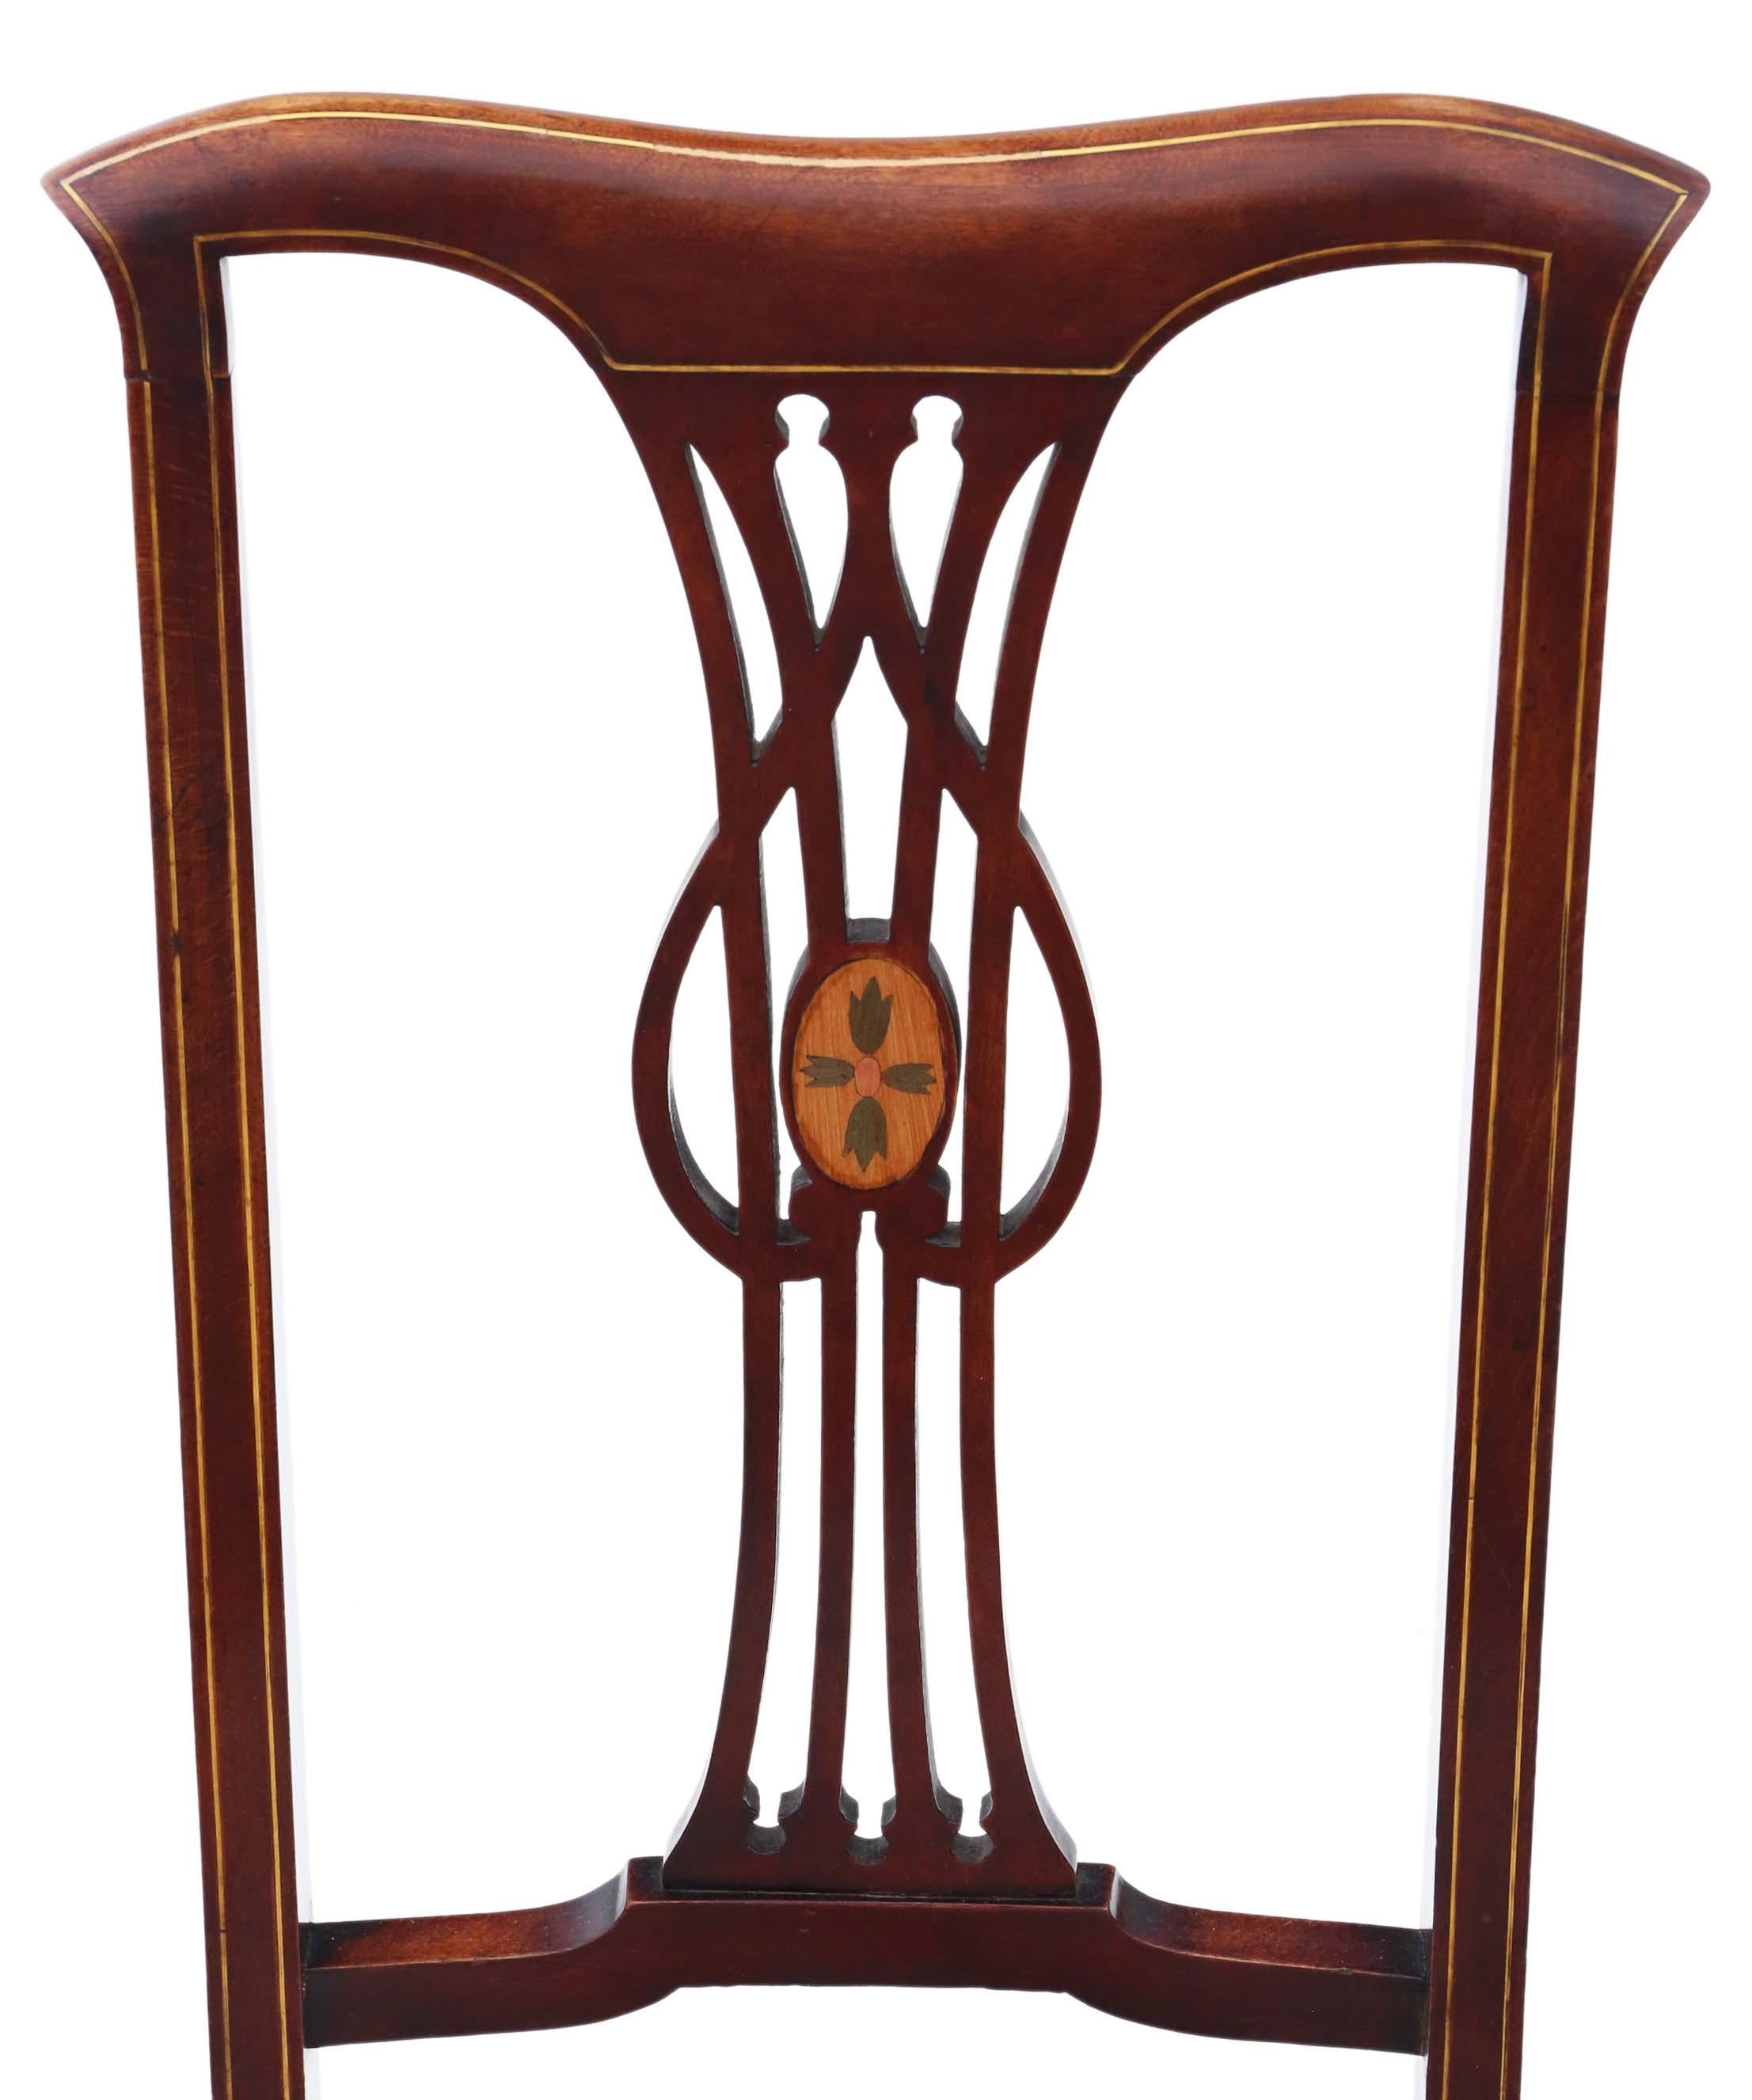 Set of 4 Victorian circa 1900 Art Nouveau Inlaid Mahogany Dining Chairs 3